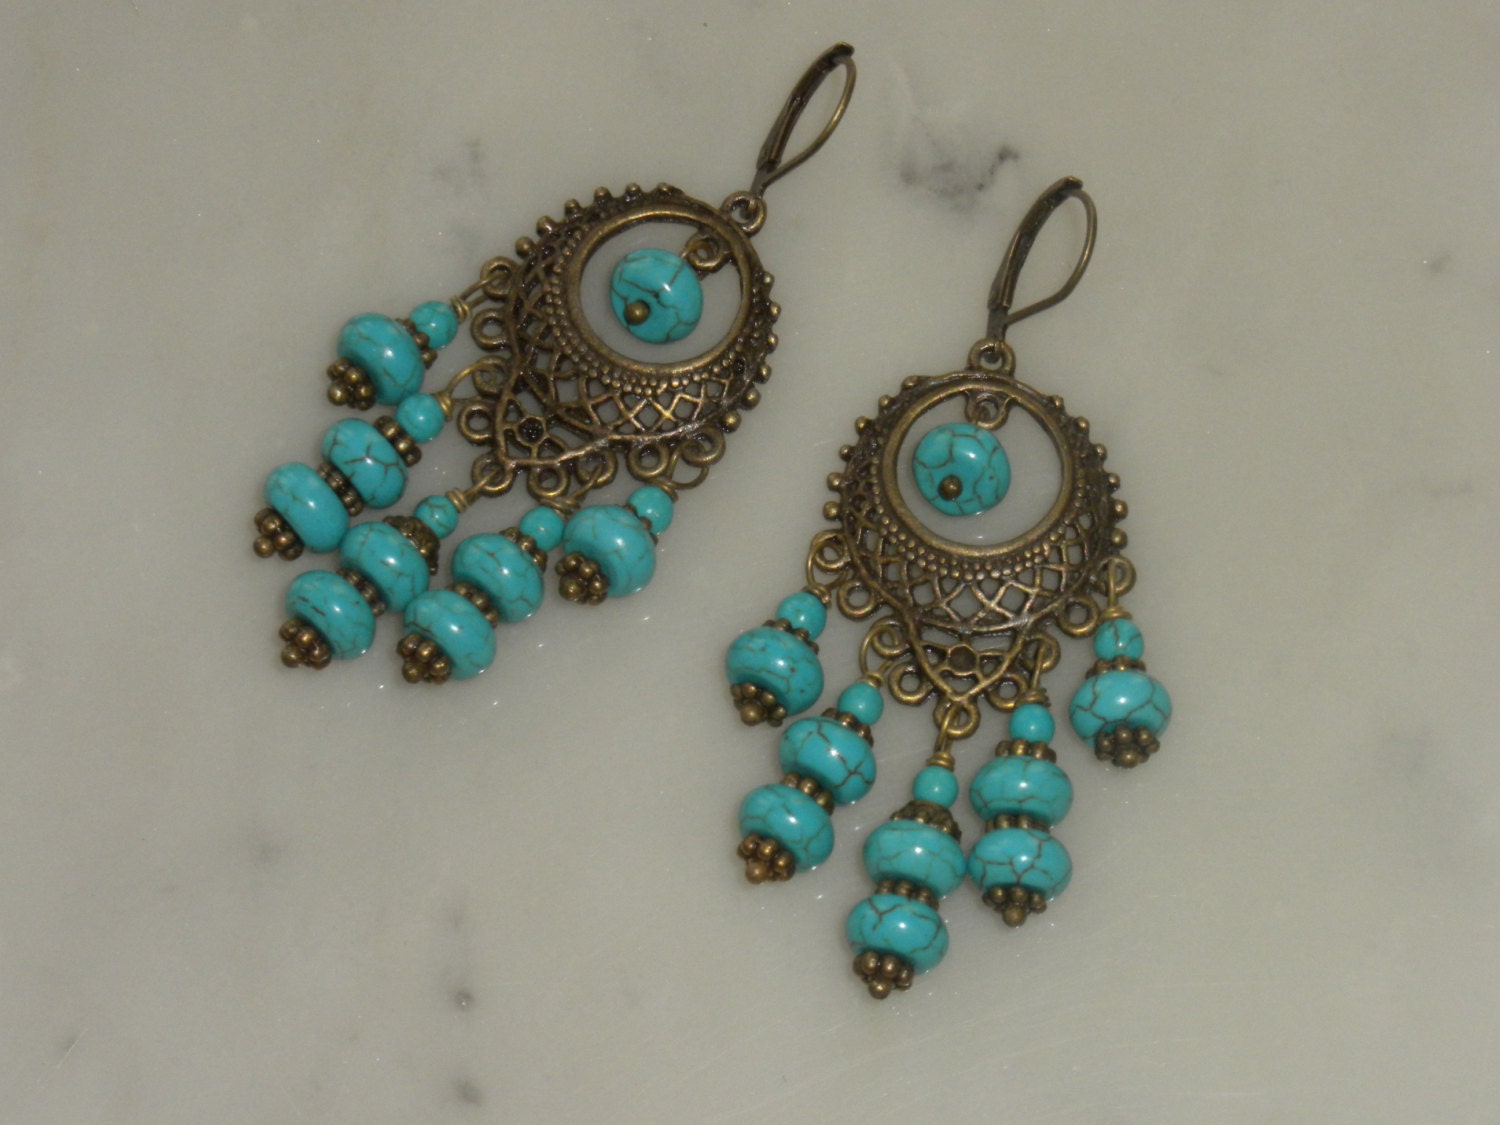 SALE-Blue turquoise chandelier earrings vintage gypsy style